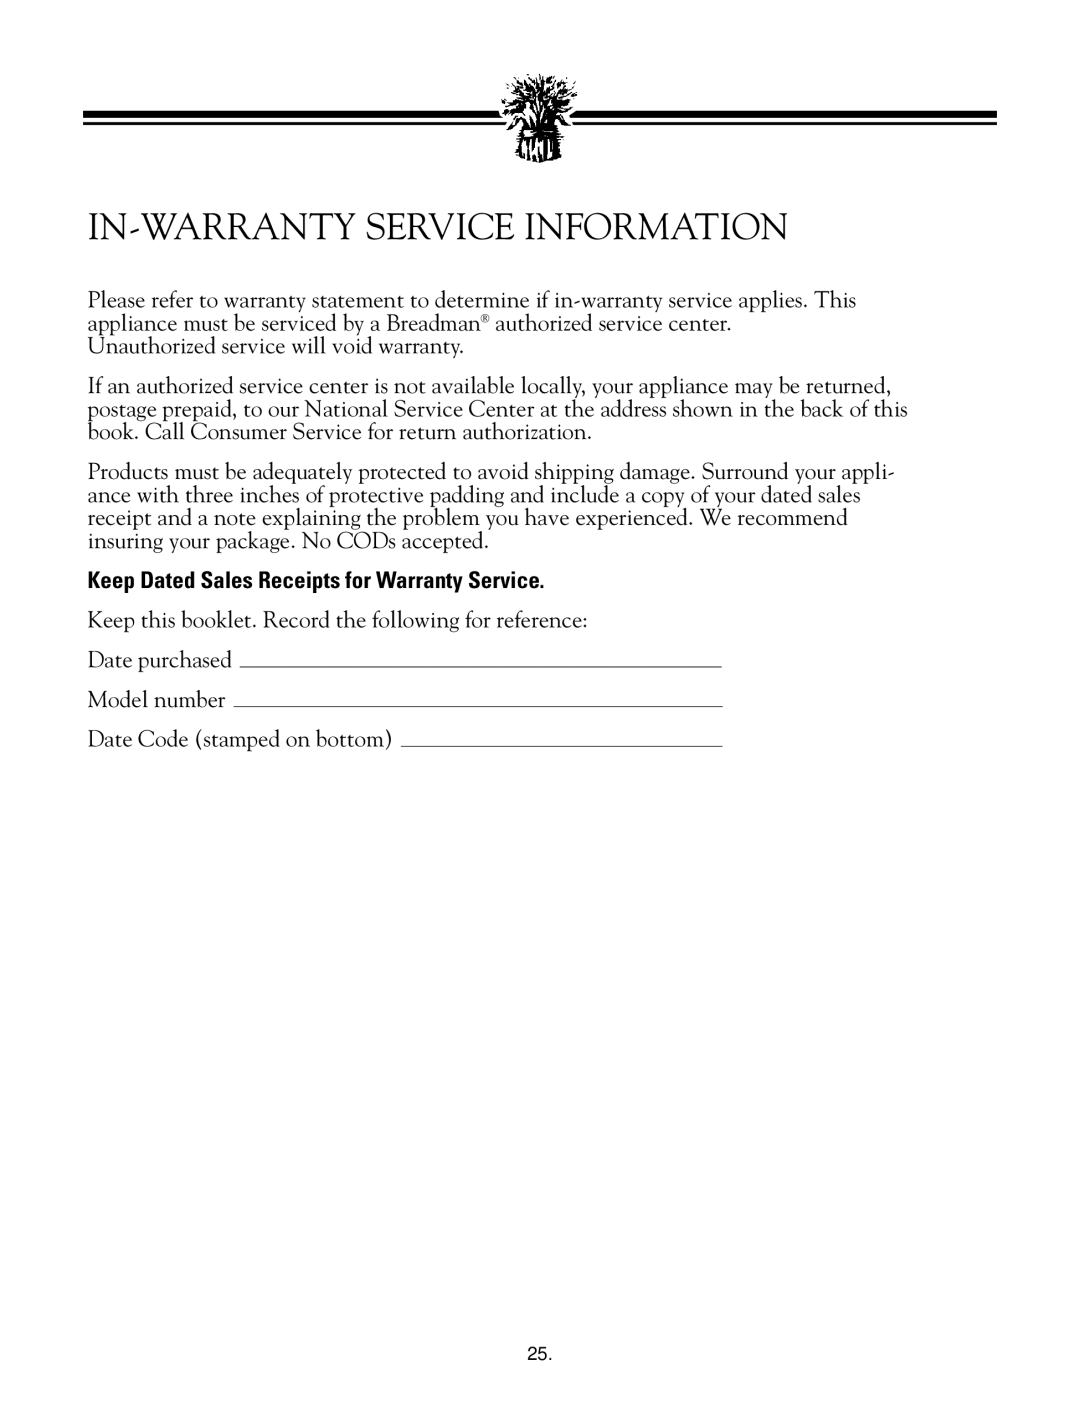 Breadman TR888 instruction manual In-Warranty Service Information, Keep Dated Sales Receipts for Warranty Service 